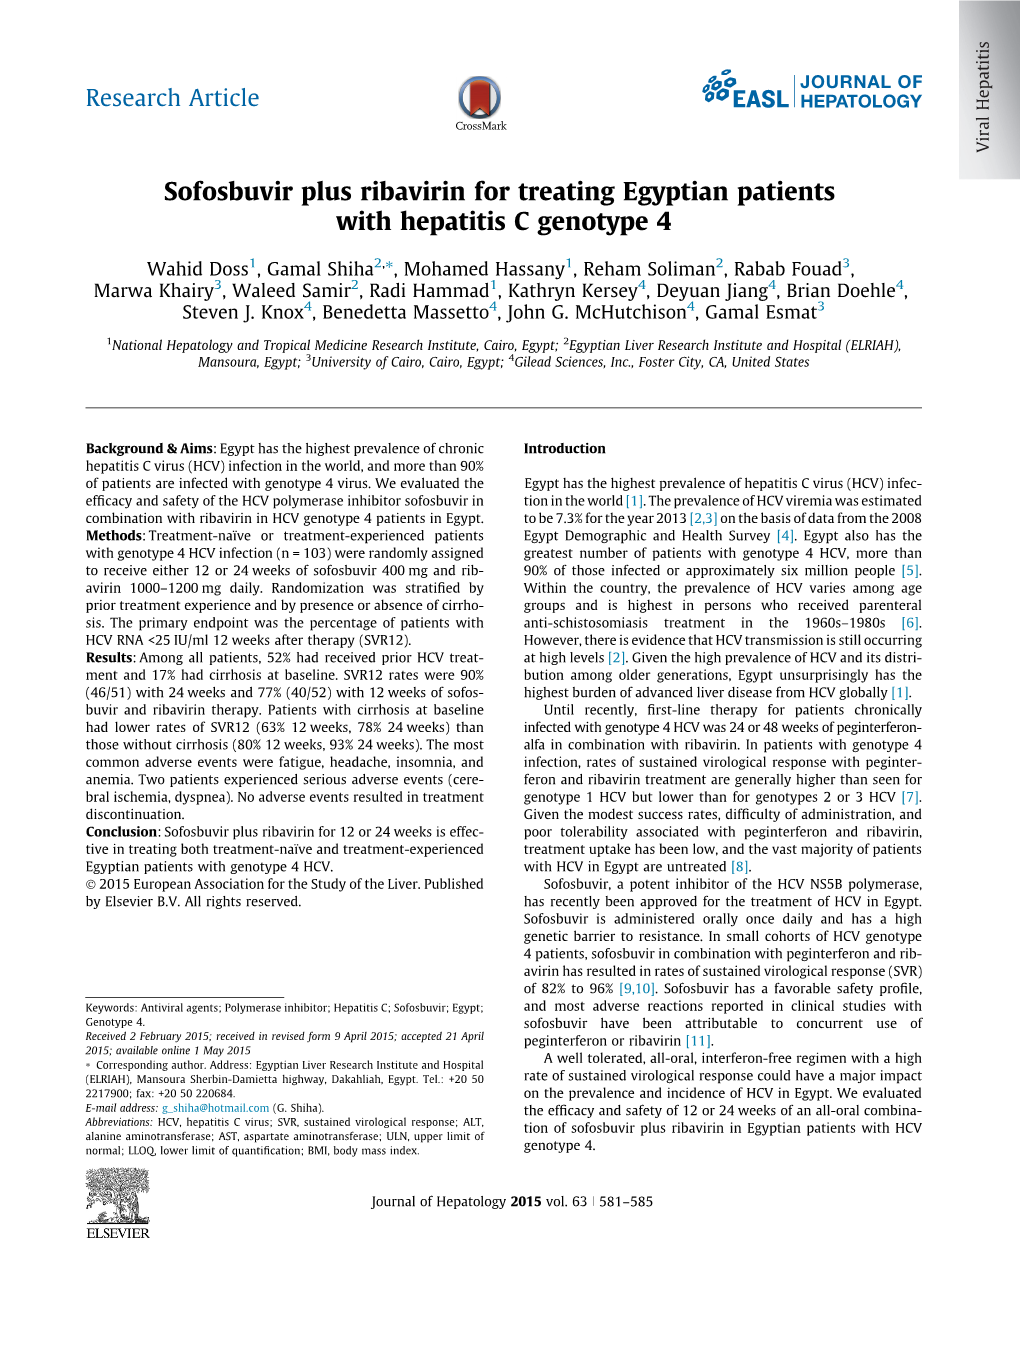 Sofosbuvir Plus Ribavirin for Treating Egyptian Patients with Hepatitis C Genotype 4